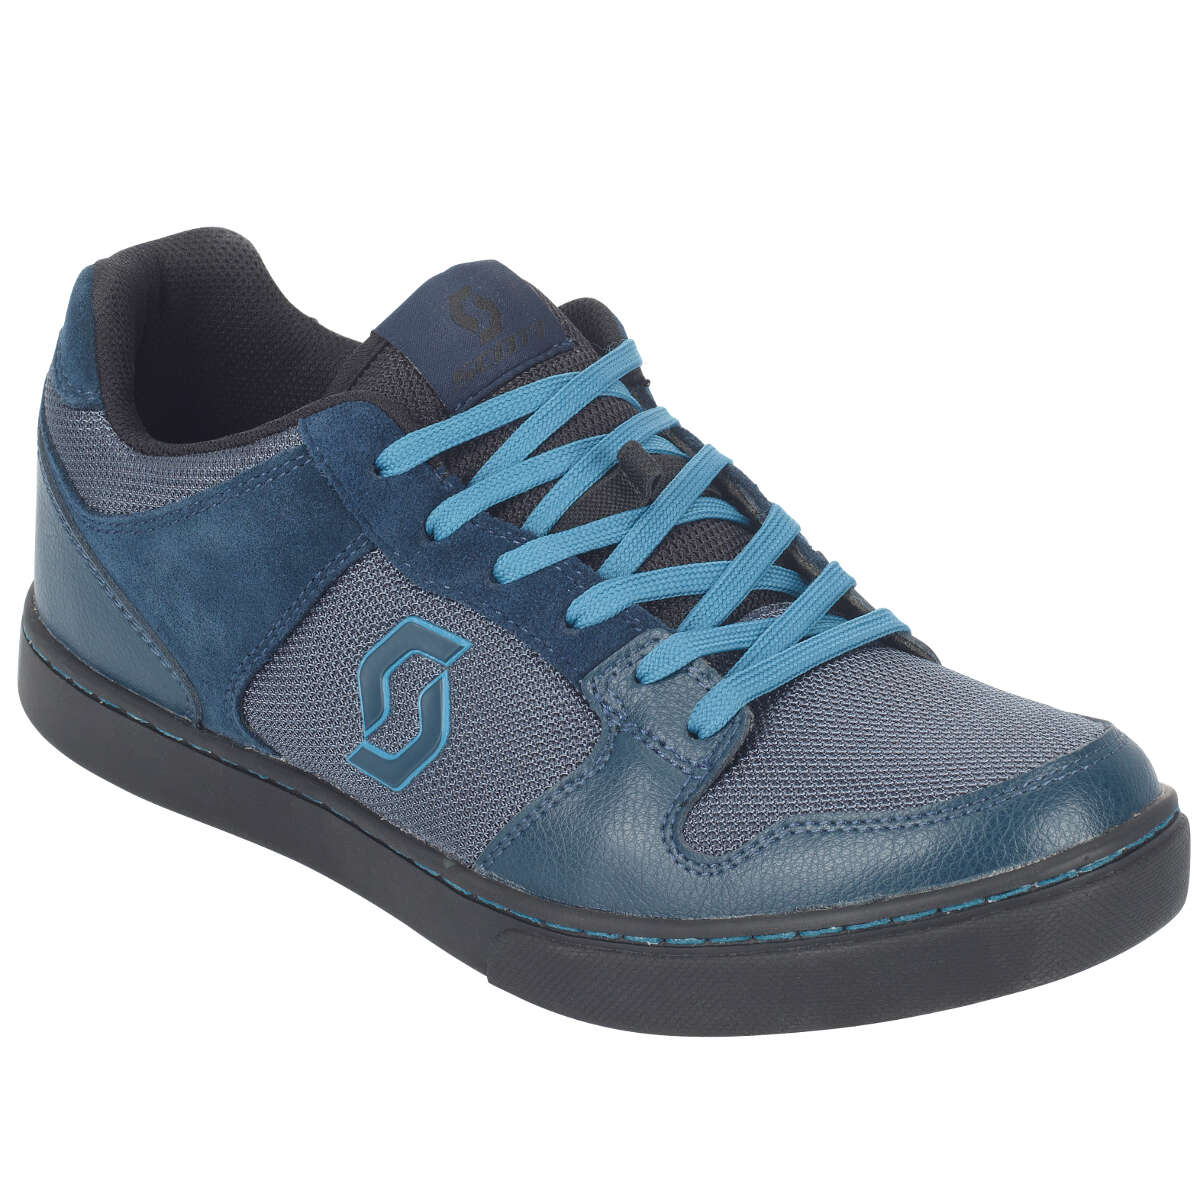 Scott Chaussures VTT FR 10 Blue/Black